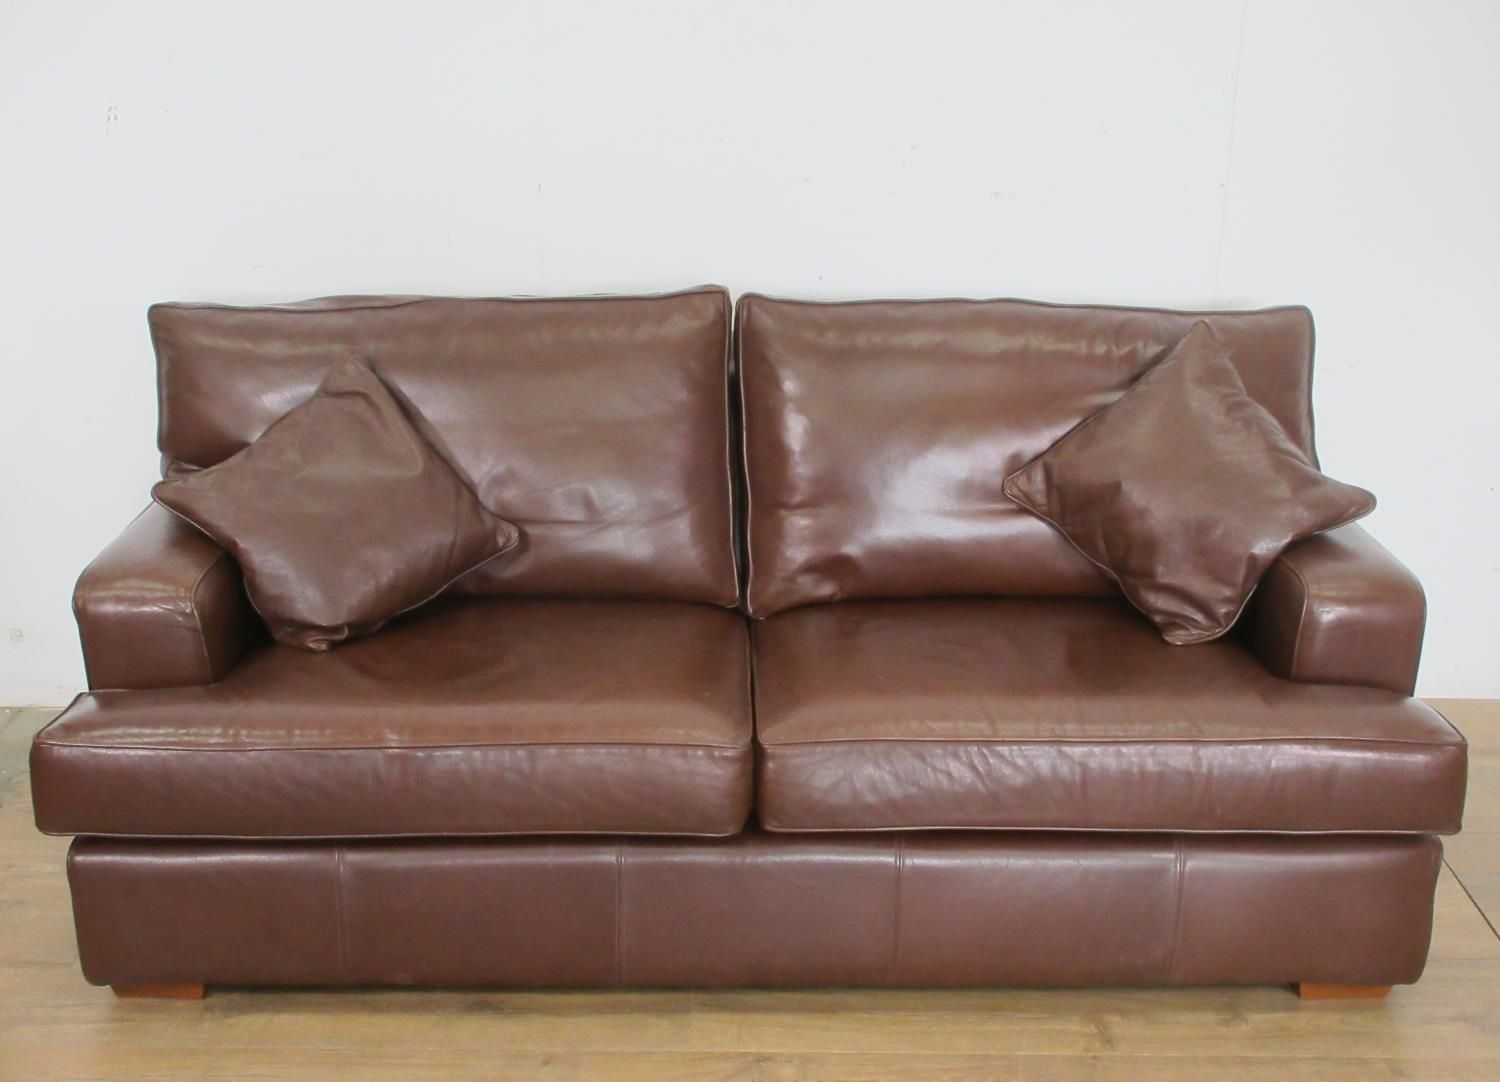 A Multiyork Brown Leather Sofa For Multiyork Leather Sofas (View 5 of 10)